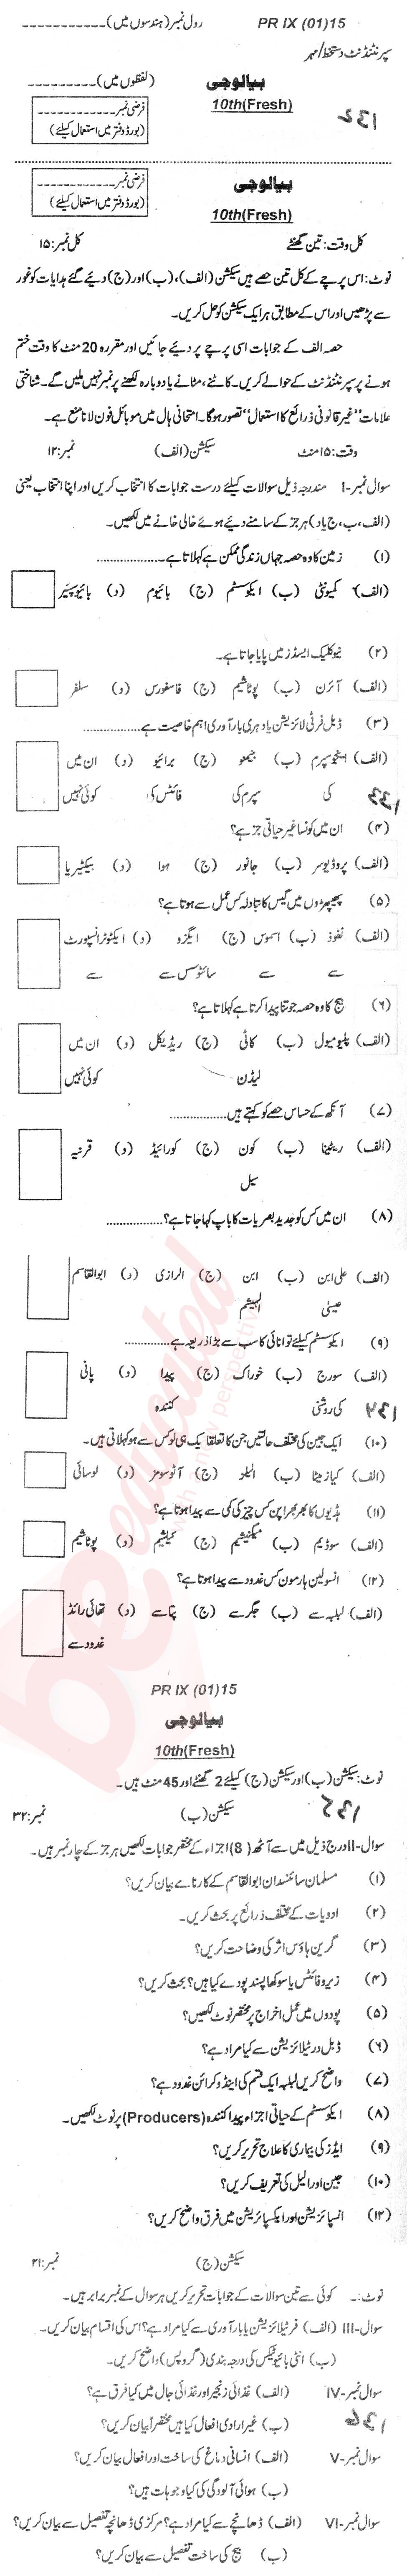 Biology 10th Urdu Medium Past Paper Group 1 BISE Malakand 2015